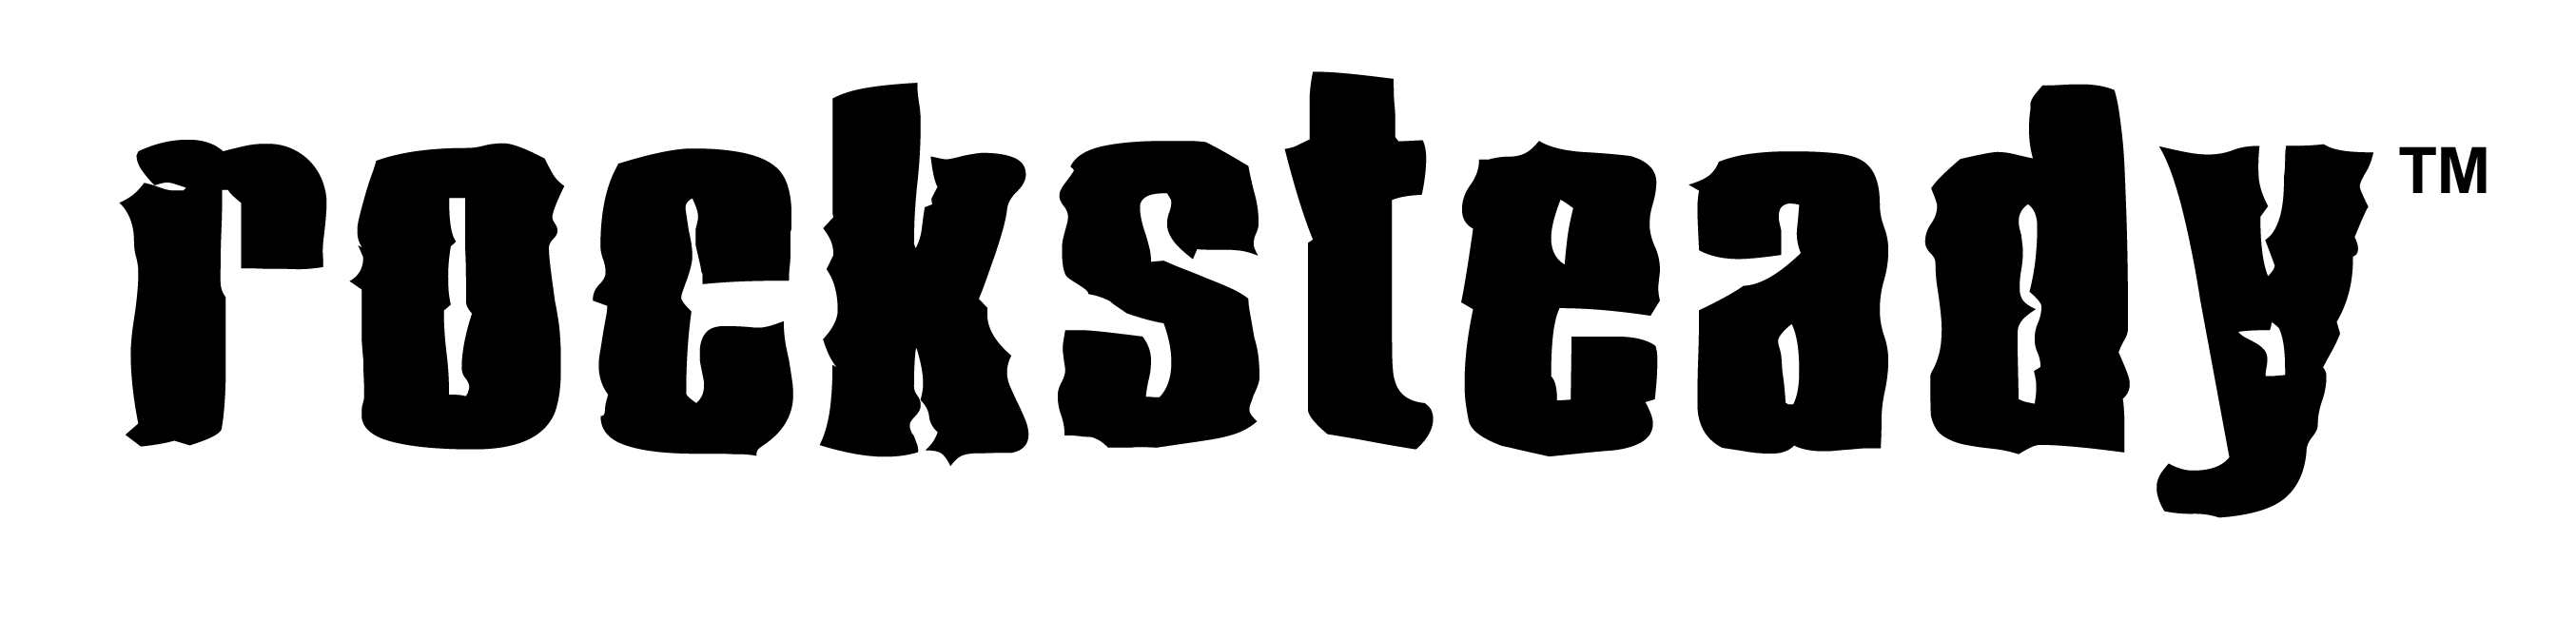 Logo for Rocksteady Studios (Warner Bros. Interactive Entertainment)